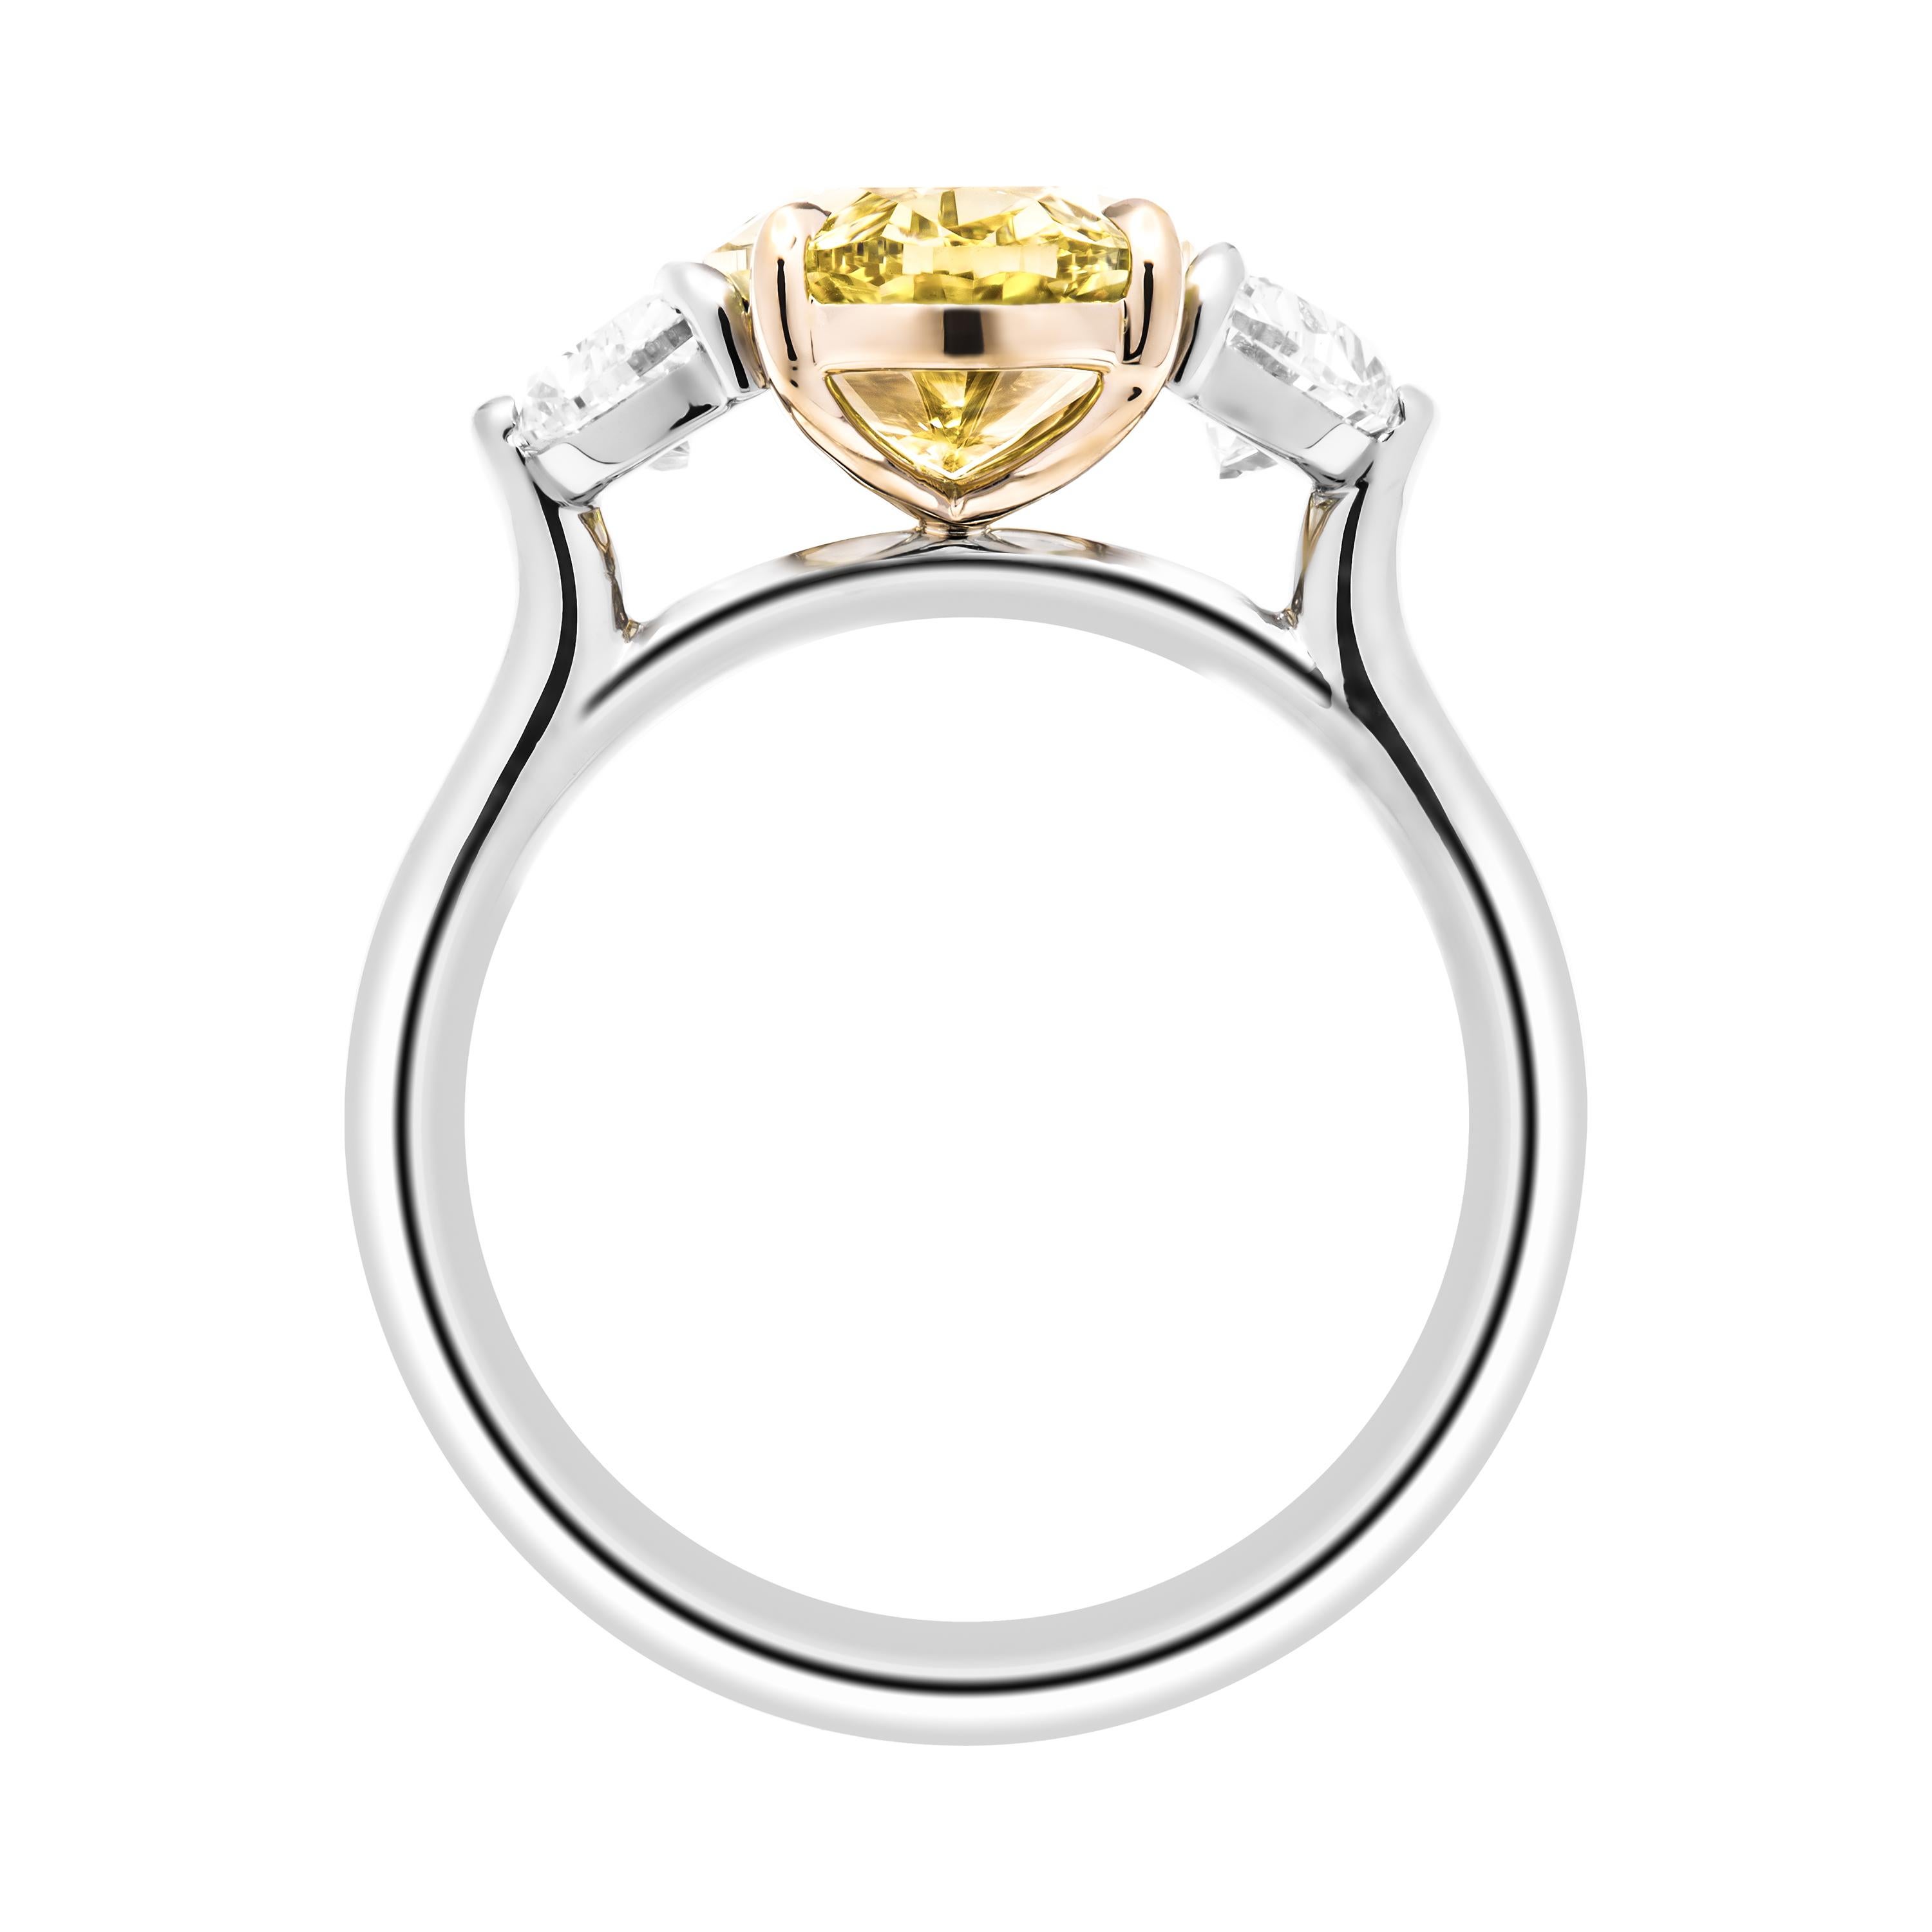 3 stone yellow diamond ring